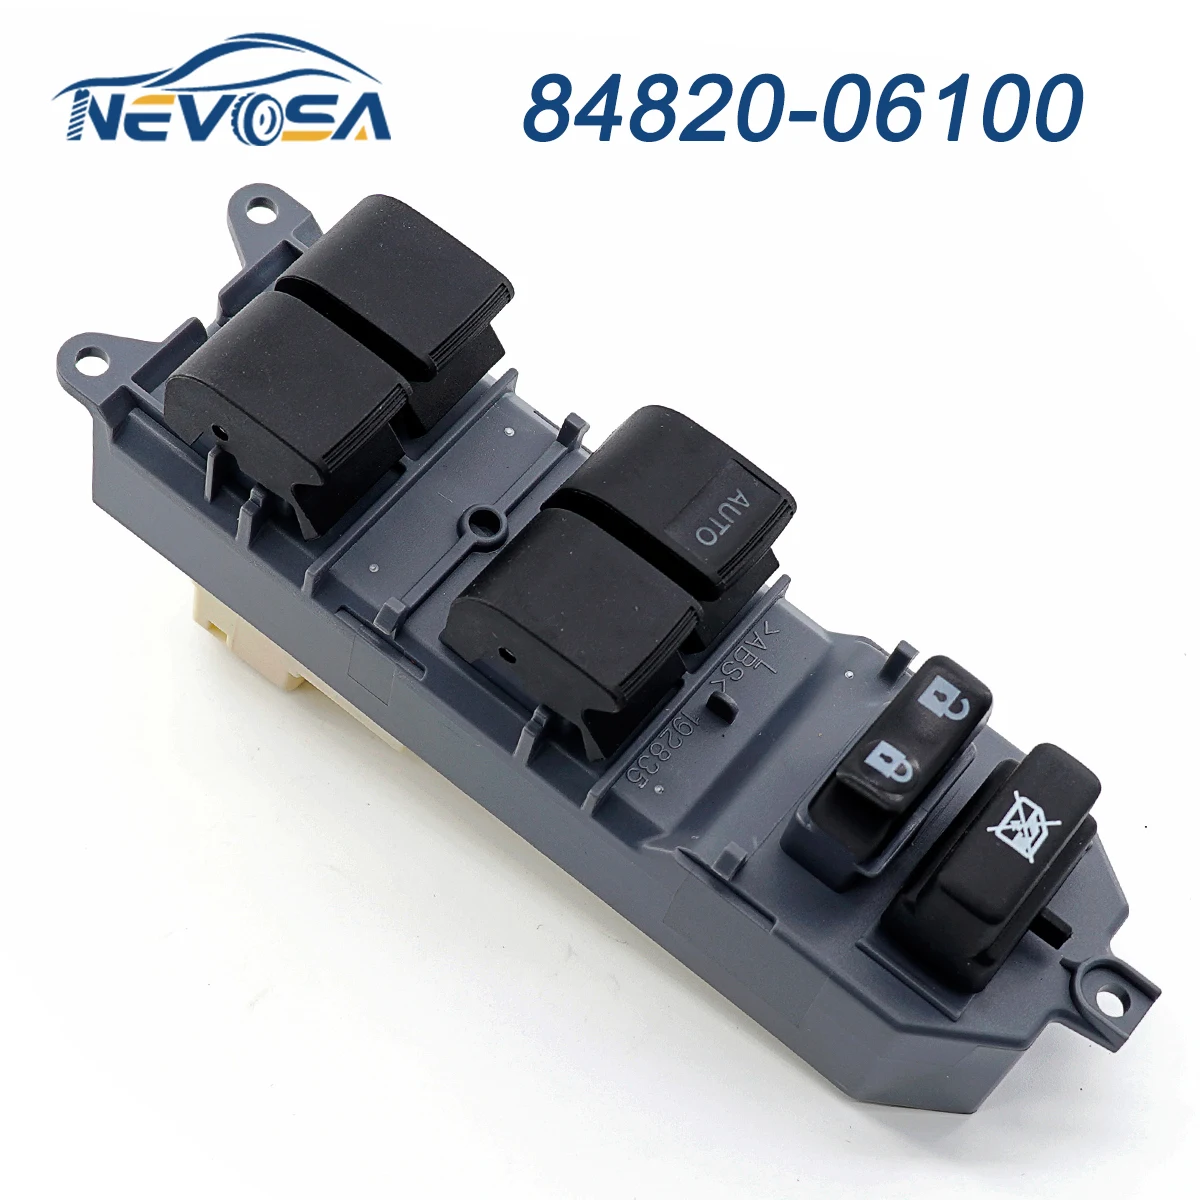 

NEVOSA 84820-06100 Master Power Left Window Switch For Toyota RAV4 Camry Corolla Auris Urban Cruiser 84820-06130 84820-02190